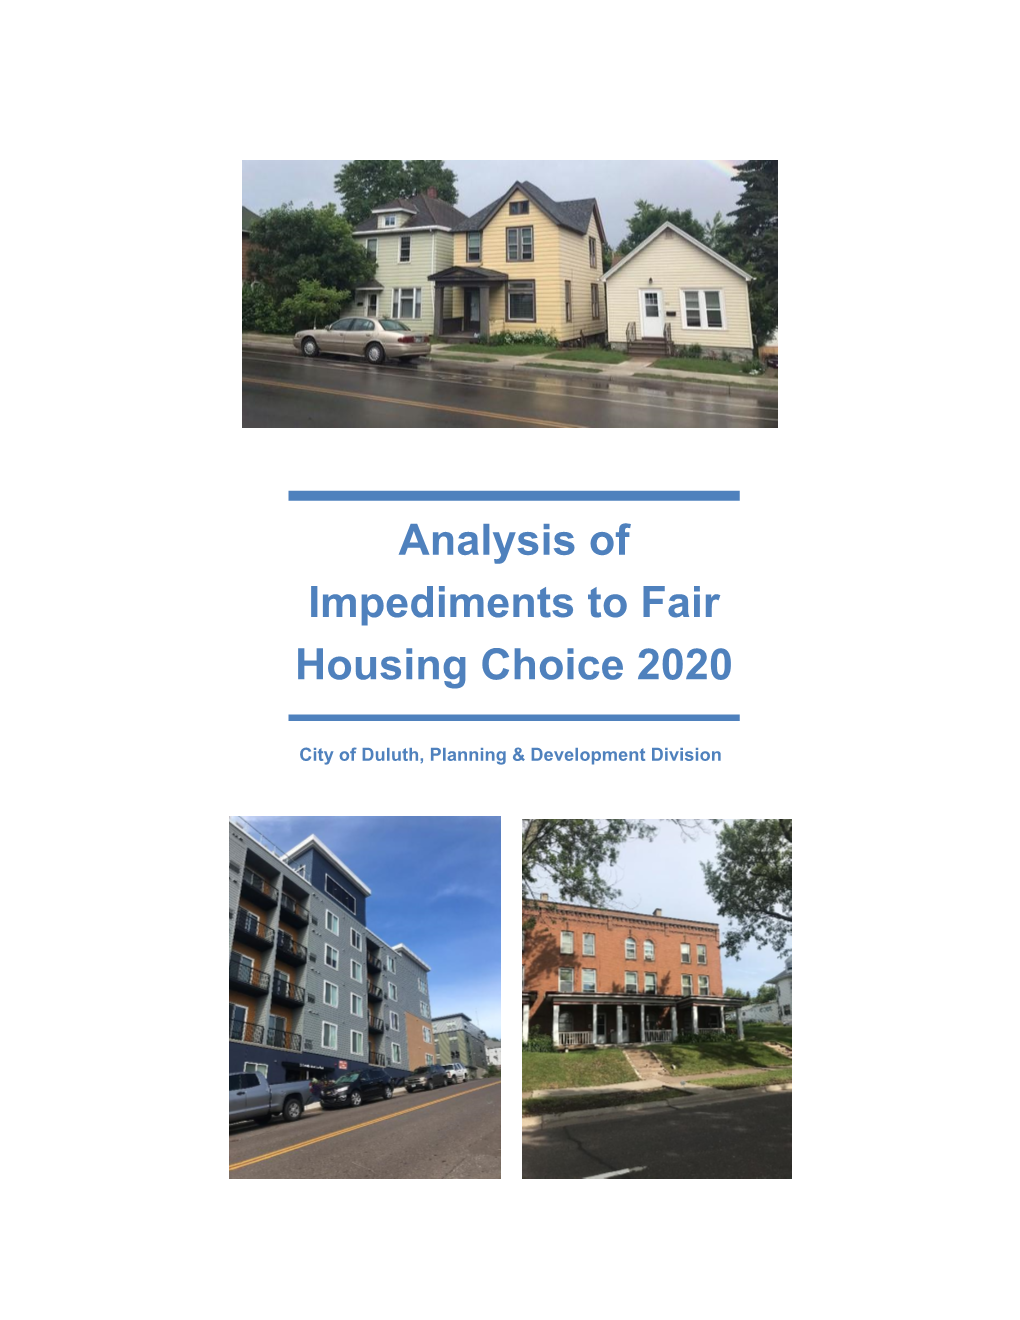 Analysis of Impediments to Fair Housing Choice 2020